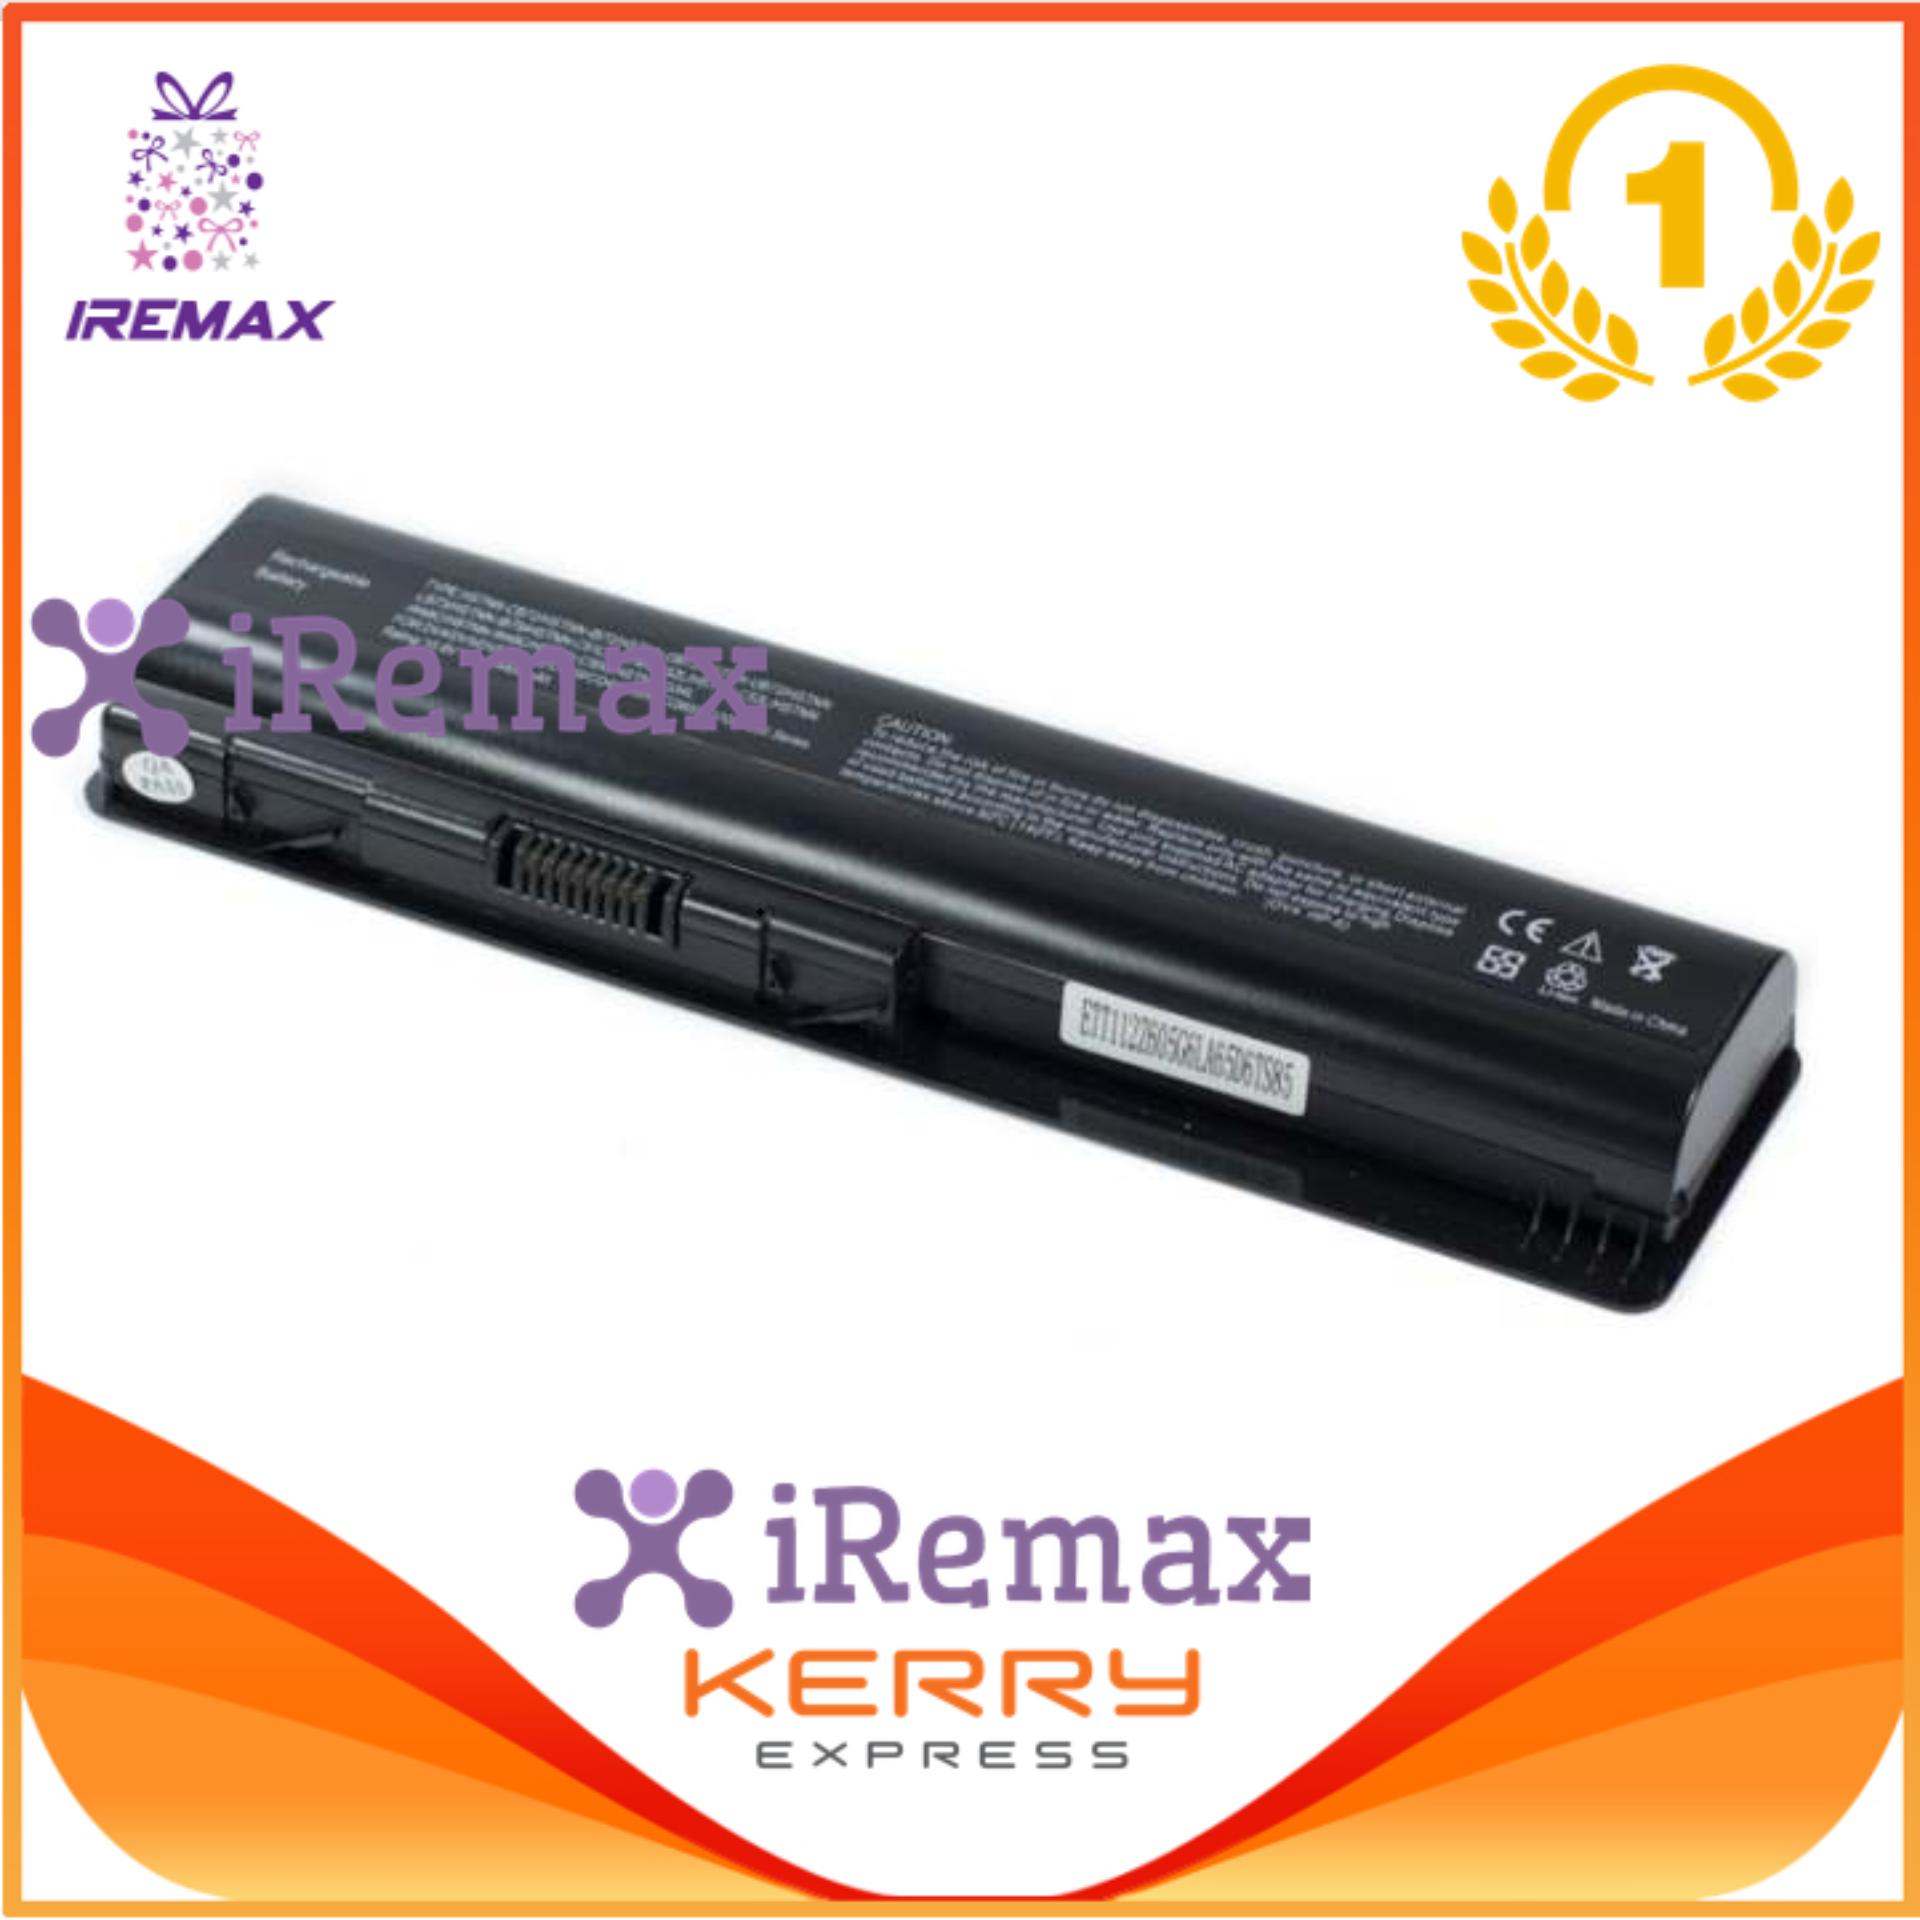 iremax แบตเตอรี่ Battery HP Pavilion DV4 Series CQ40 CQ45